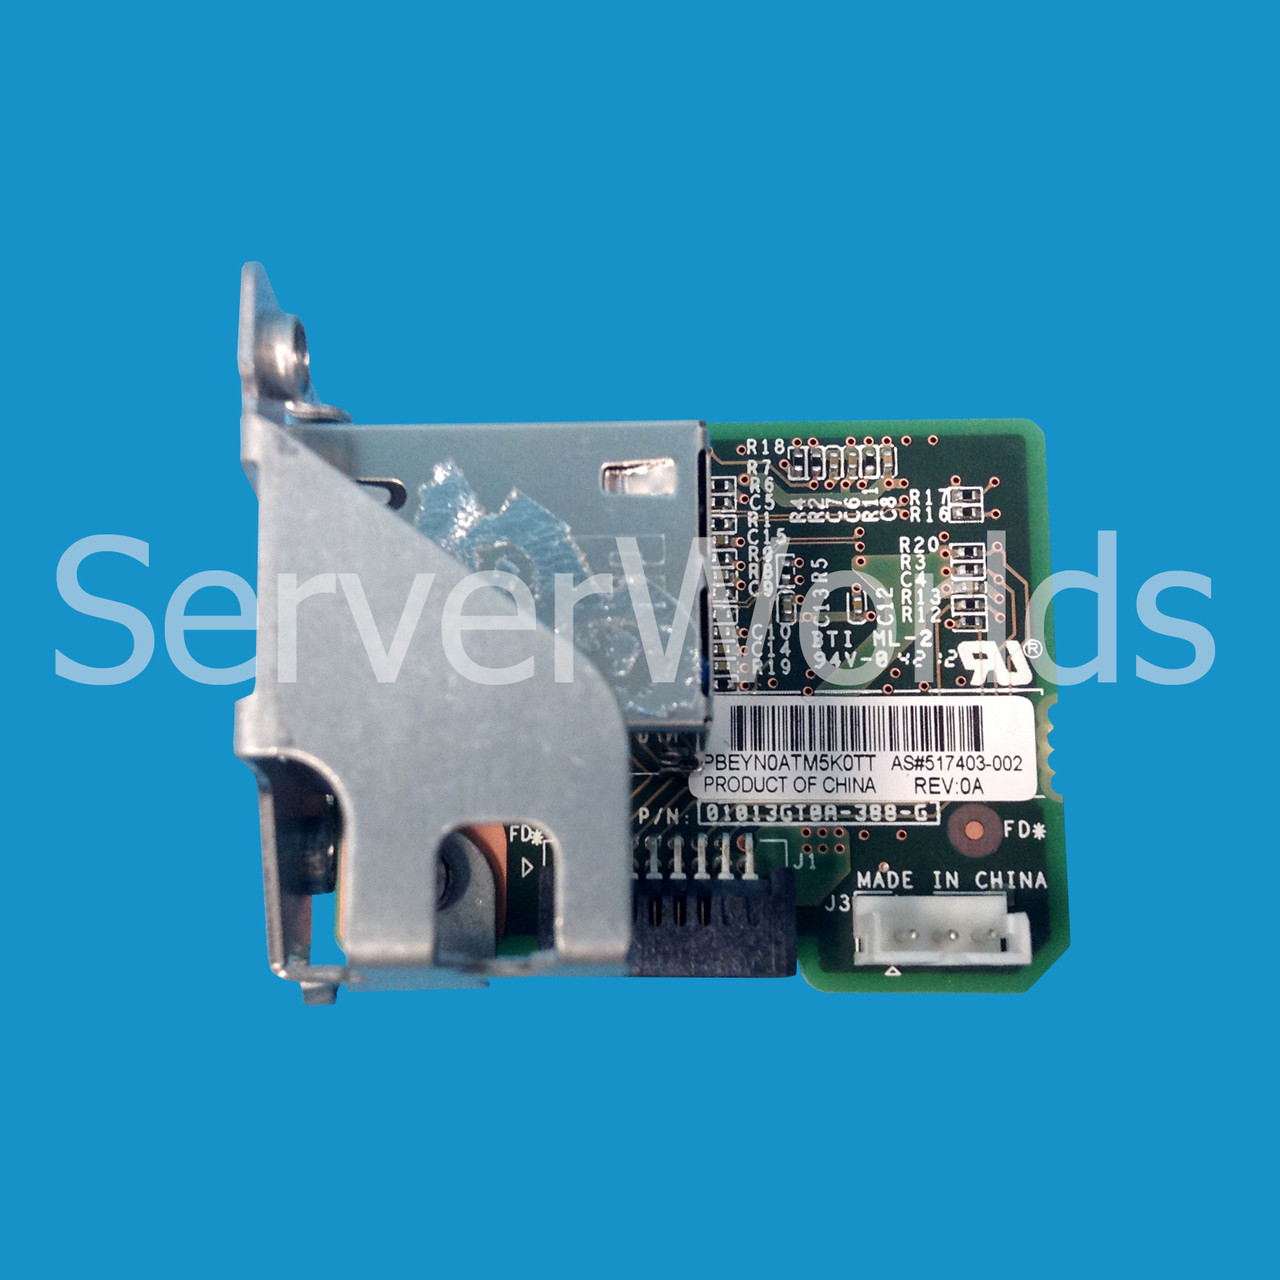 HP 517403-002 Management Port Option Kit 